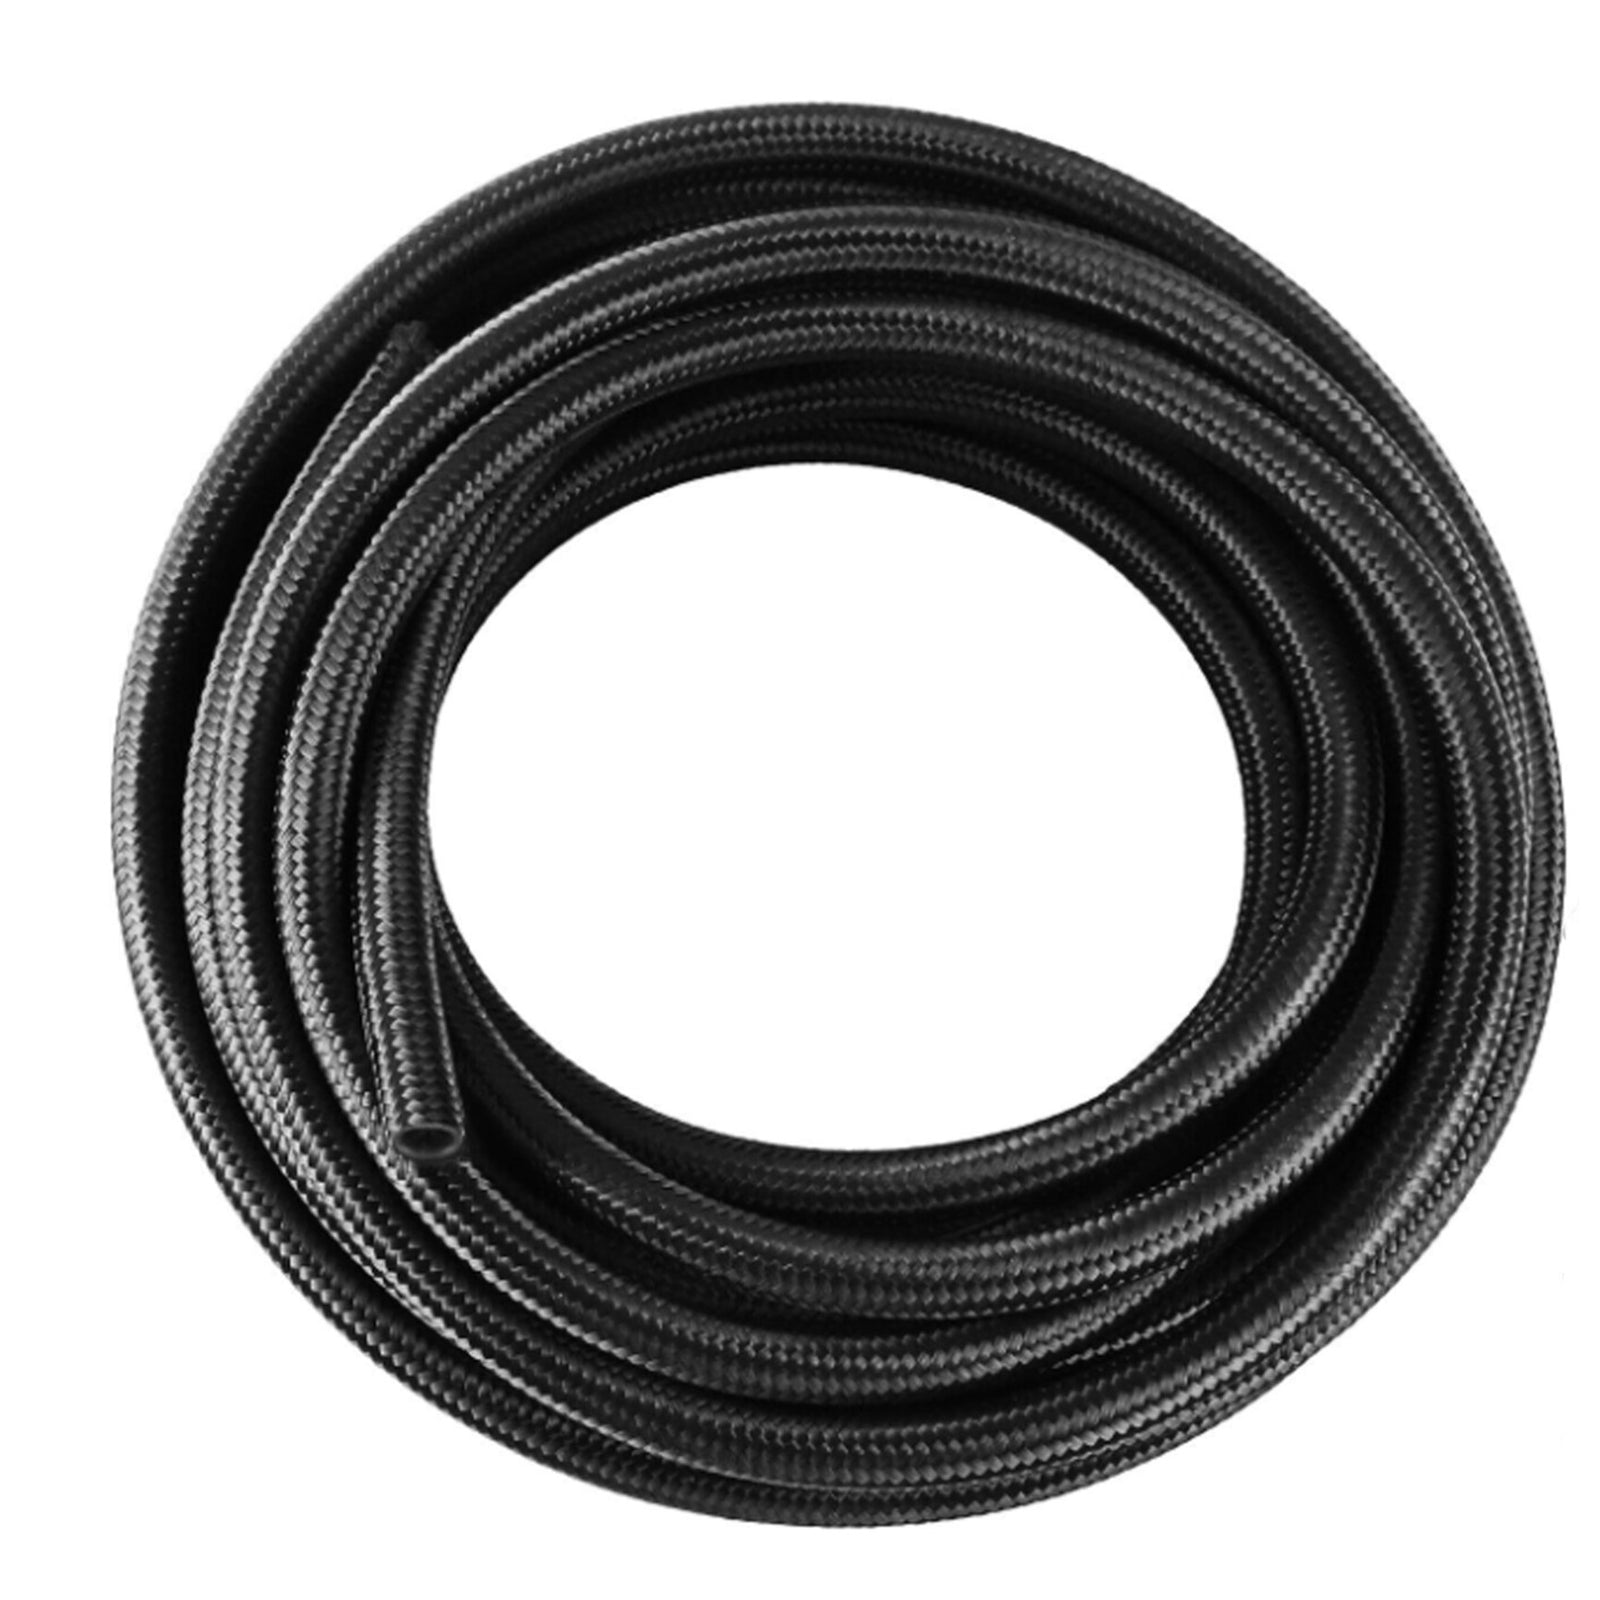 200 Series PTFE (teflon) Hose - Black Stainless Steel Braid